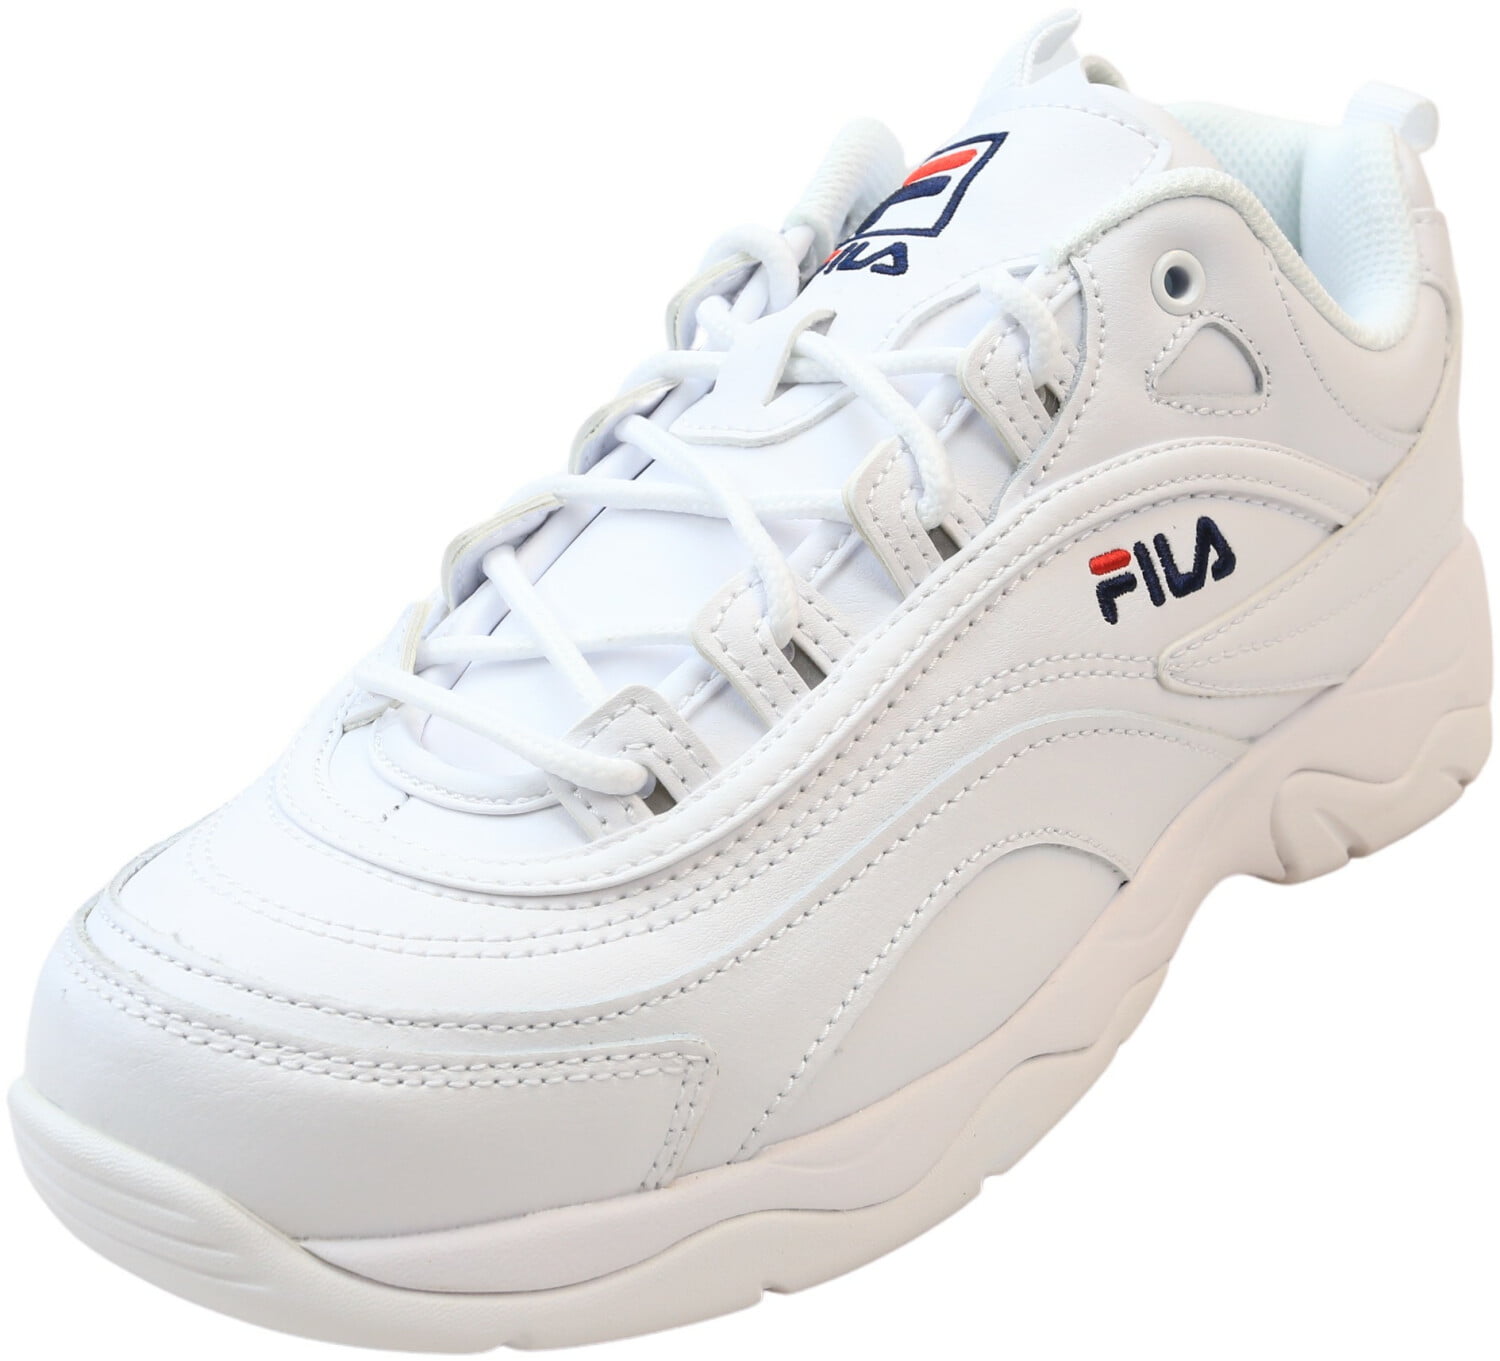 FILA - Fila Women's Disarray White / Navy Red Low Top Sneaker - 9M ...